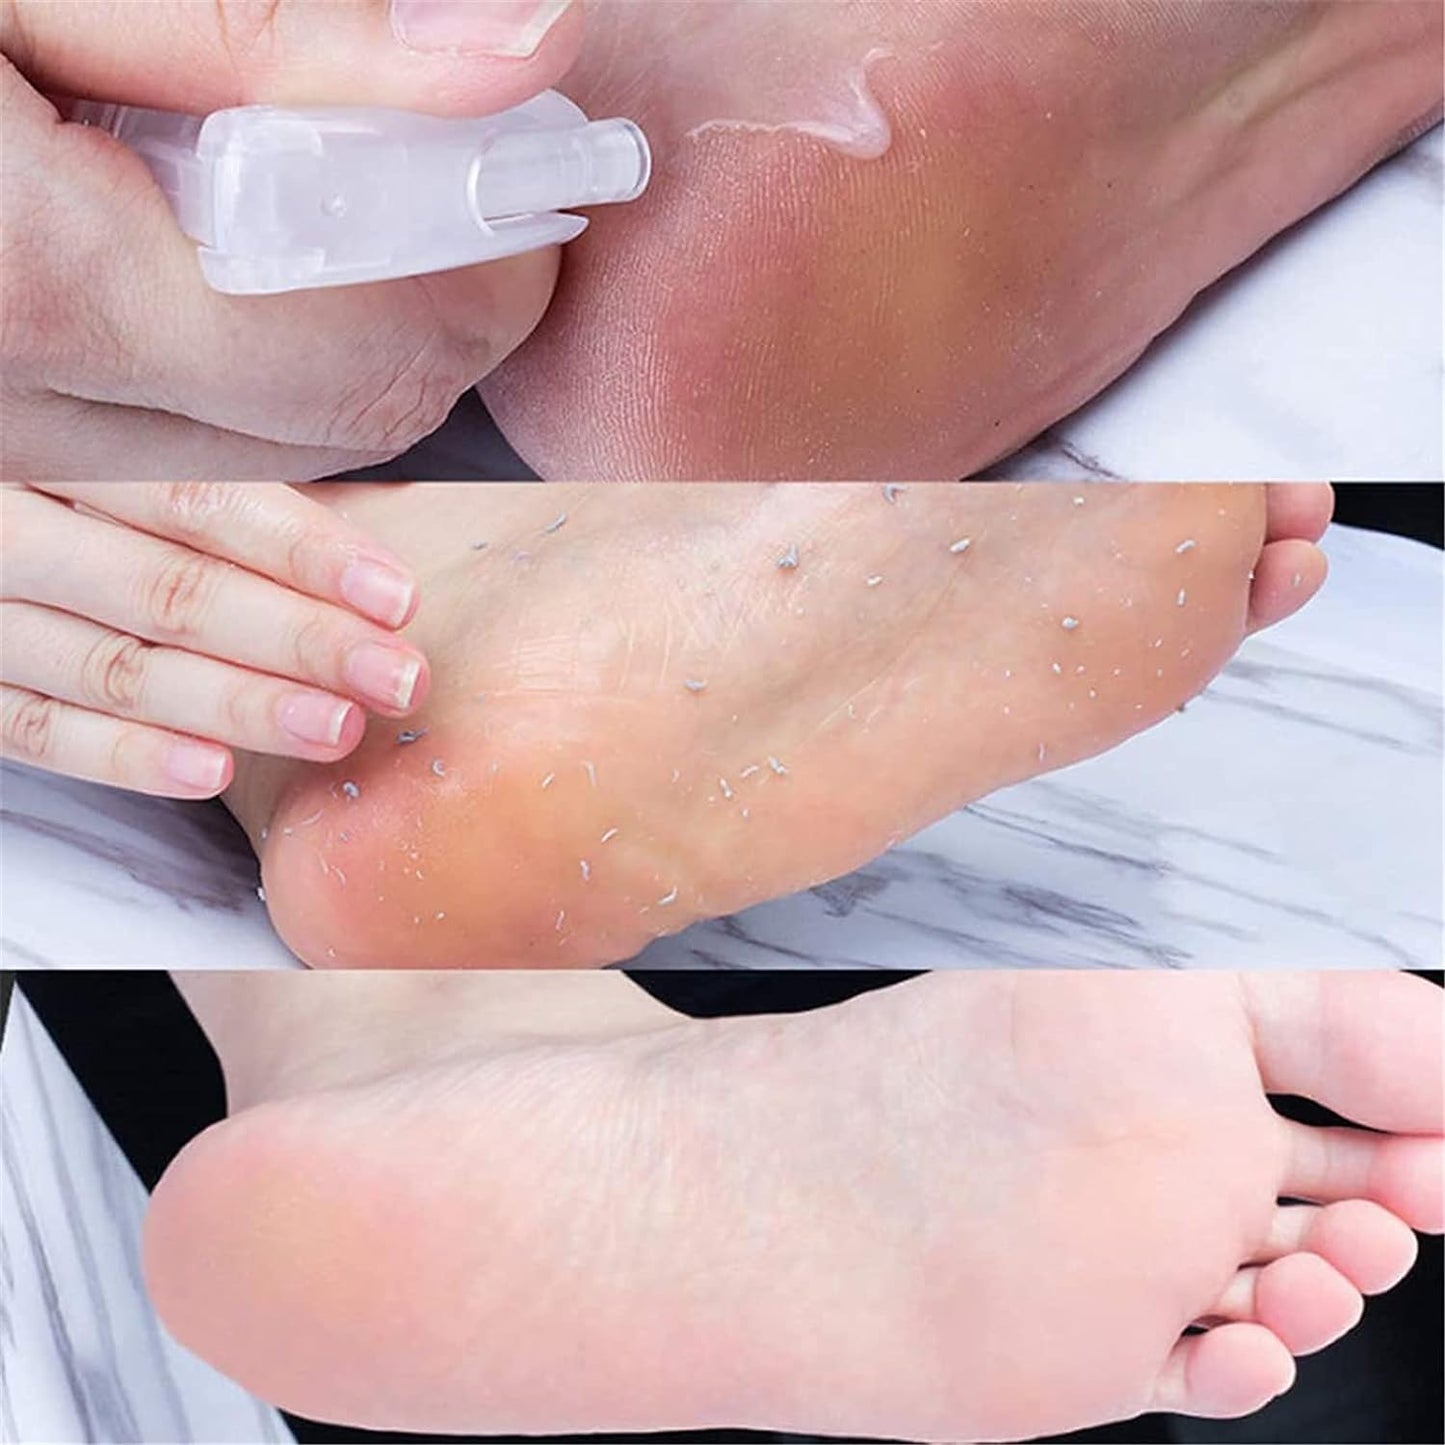 Gokame Foot Peeling Spray Orange Oil, Foot Peeling Spray That Remove Dead Skin, Hydrating Nourish Peel Off Spray, Remove Dead Skin within Seconds, Exfoliating Peeling & Calluses on Feet, 110ML